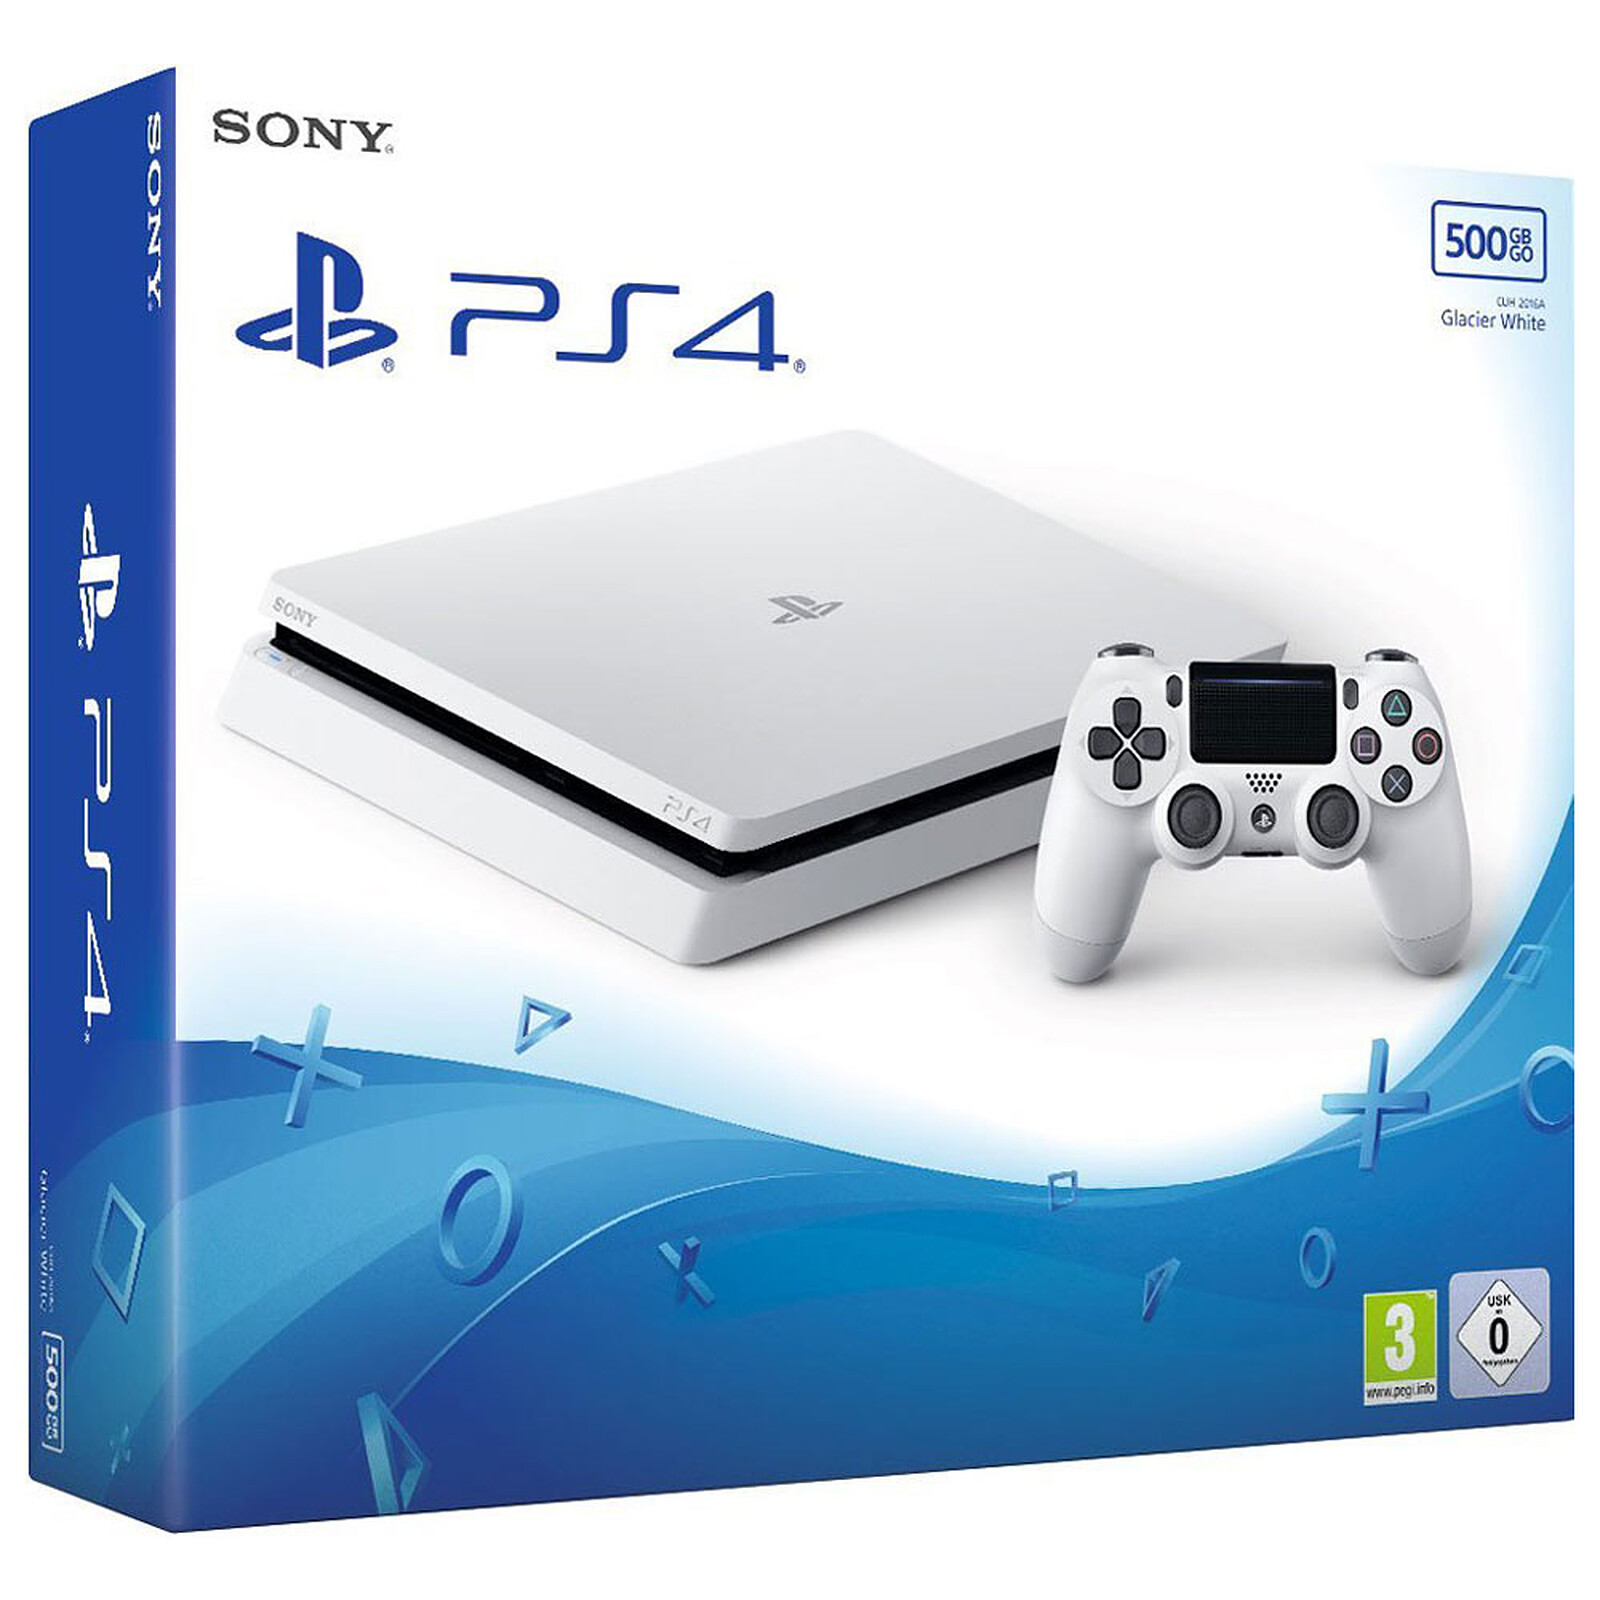 Sony PlayStation 4 Slim (500 Go) - Glacier White - Console PS4 - Garantie 3  ans LDLC